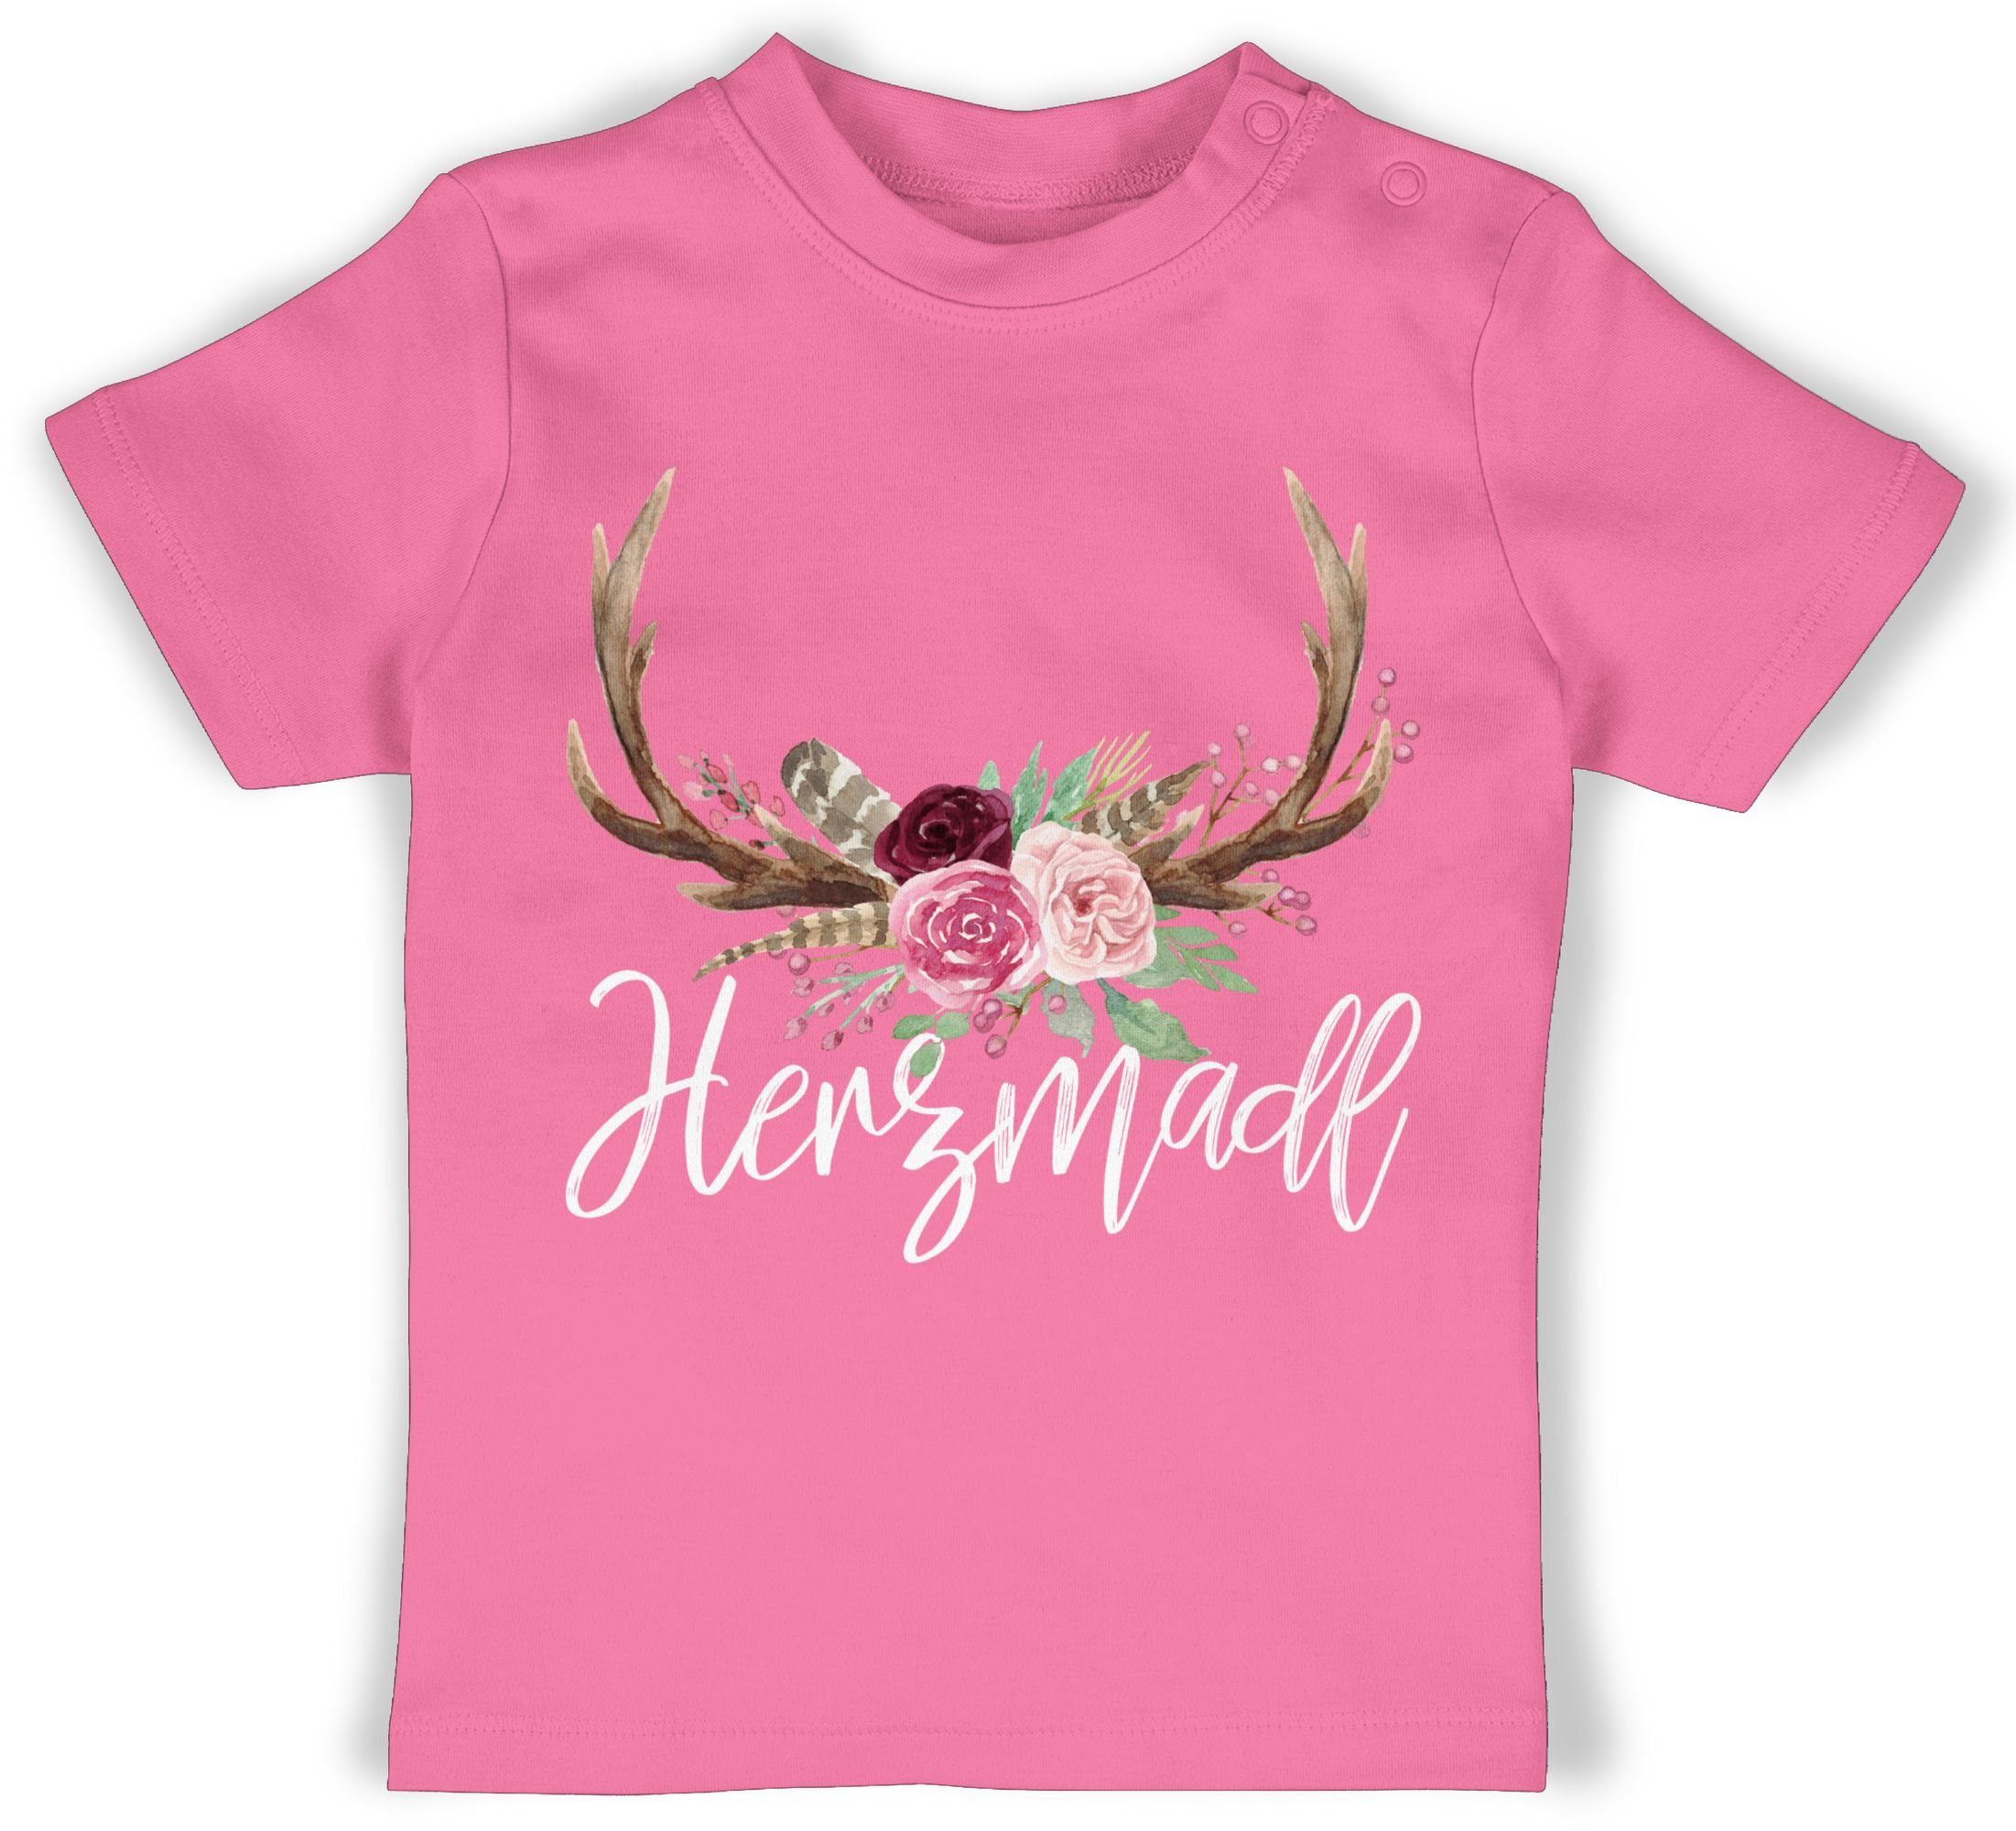 Shirtracer T-Shirt Herzmadl Mode für Oktoberfest Baby Outfit 2 Pink